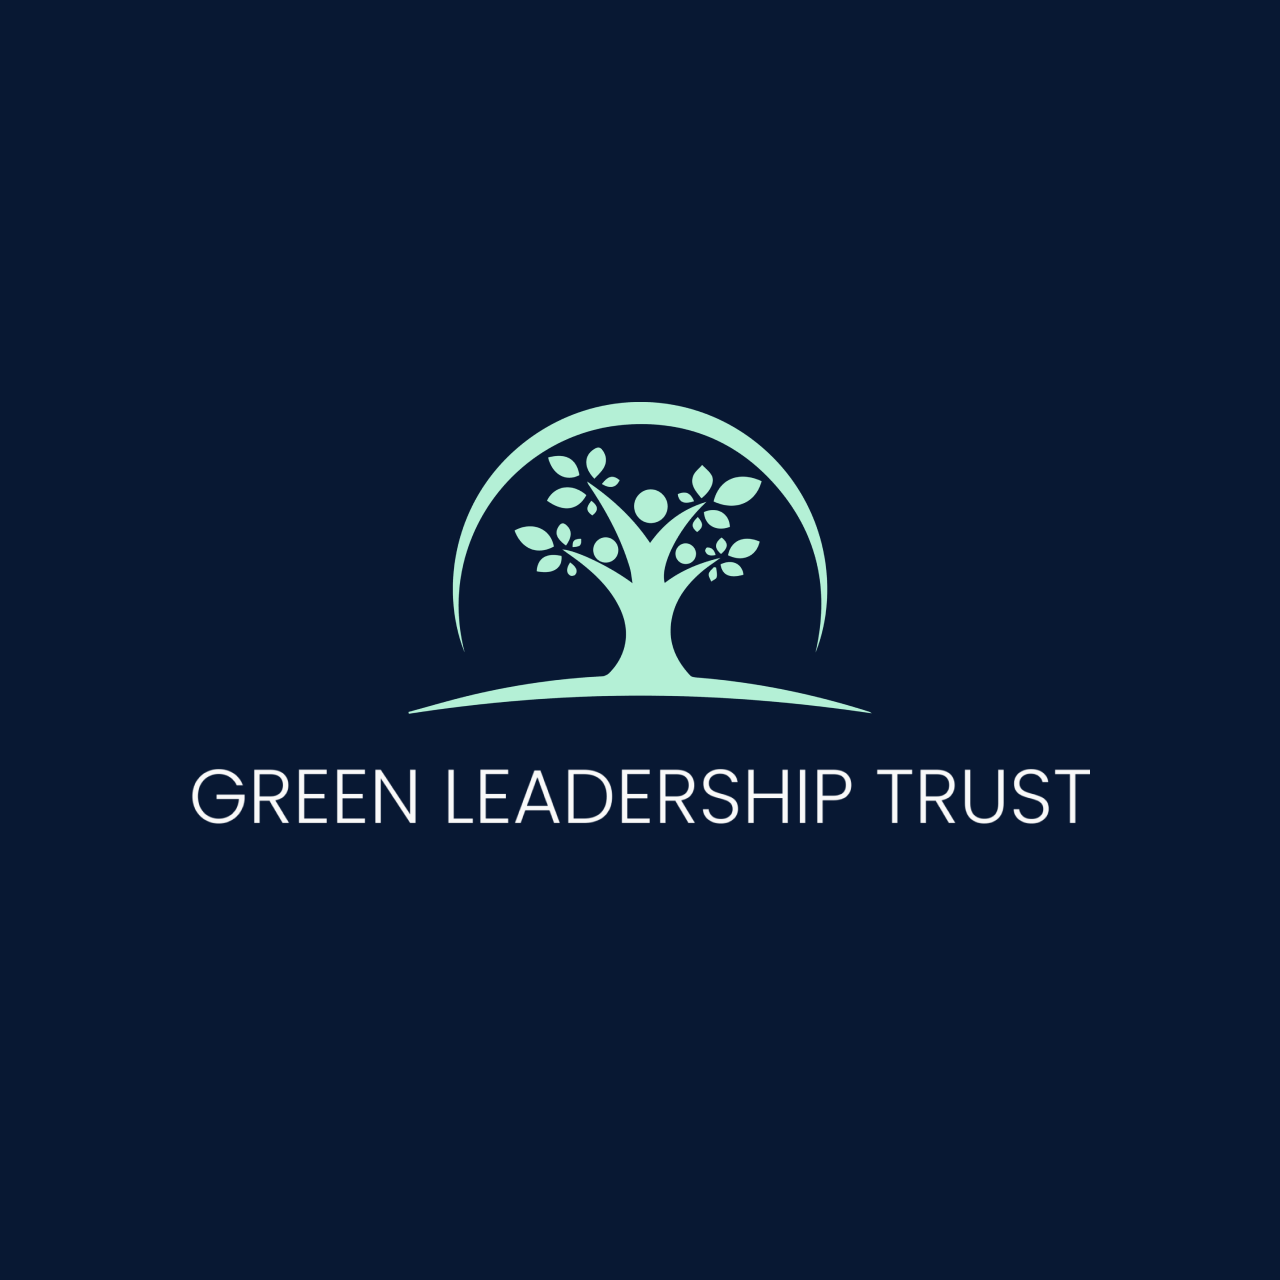 Green Leadership Trust logo graphic